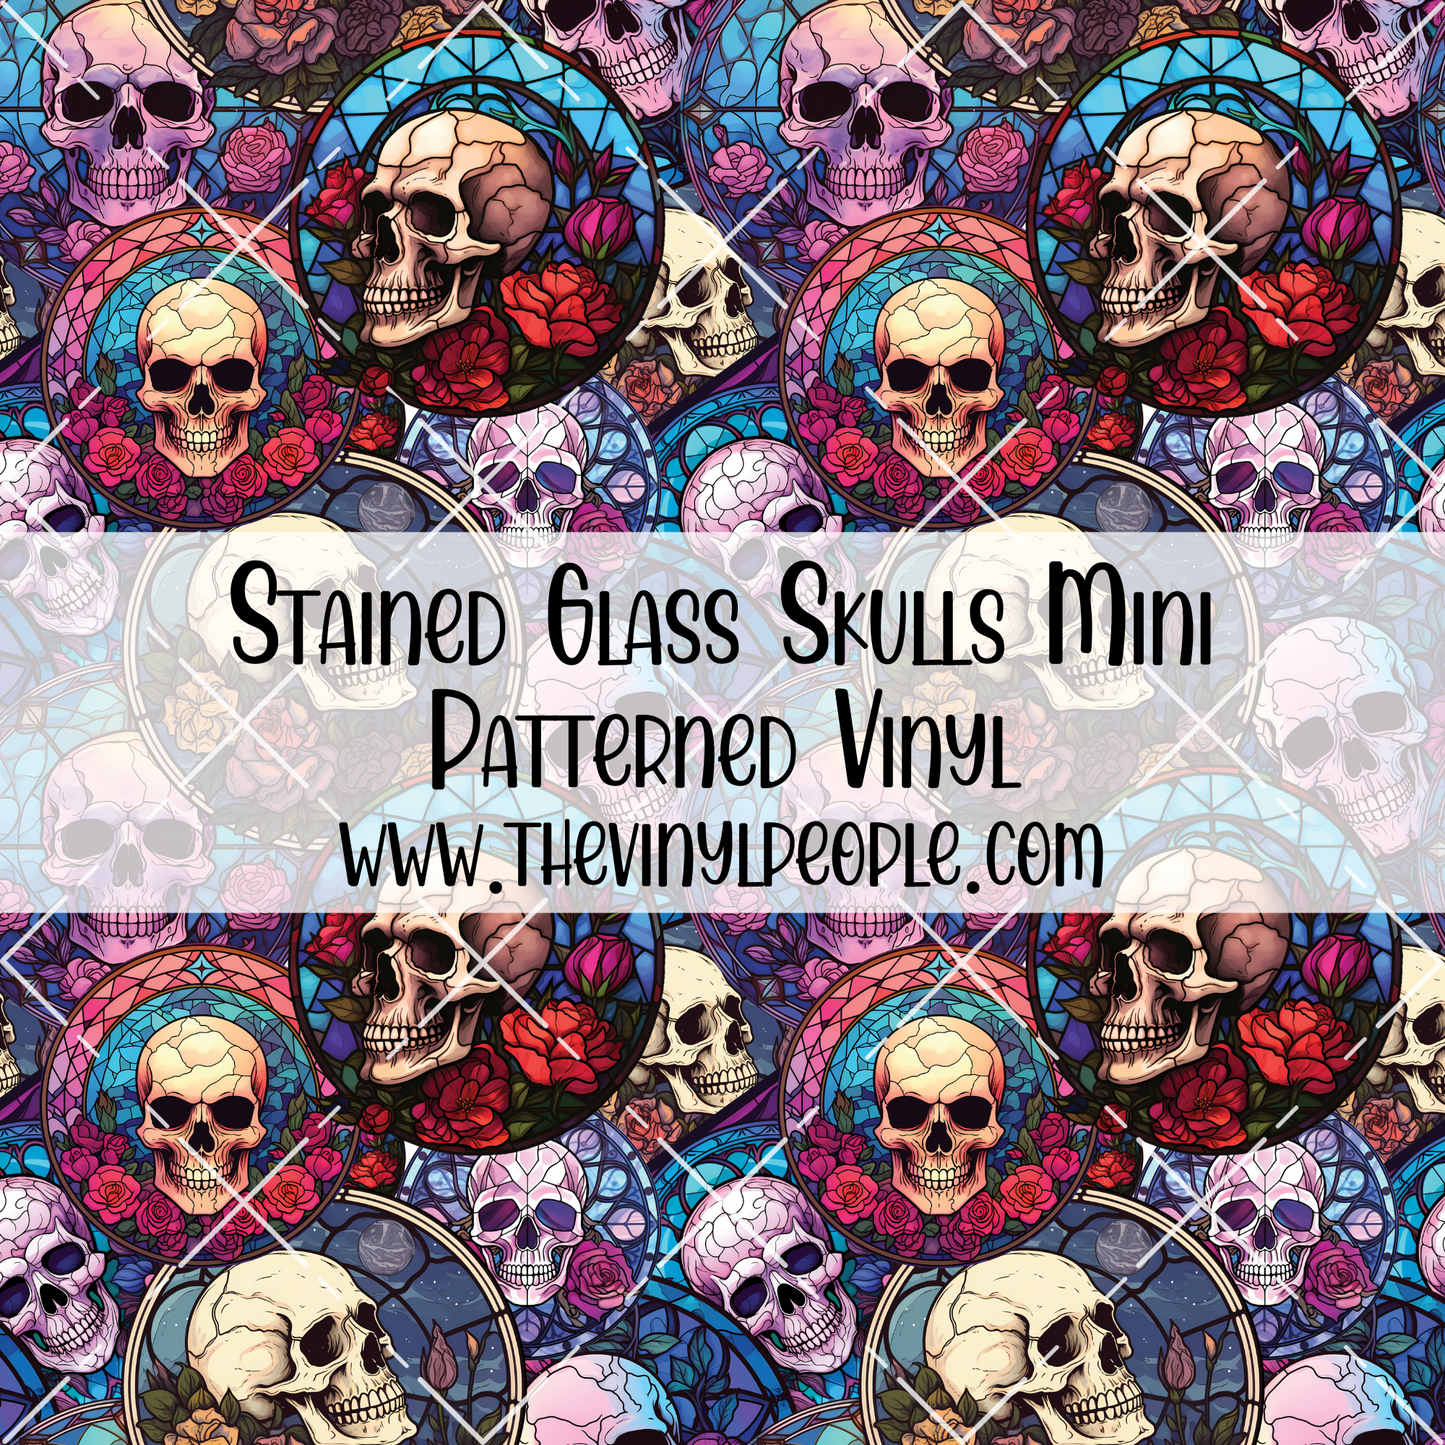 Stained Glass Skulls Patterned Vinyl